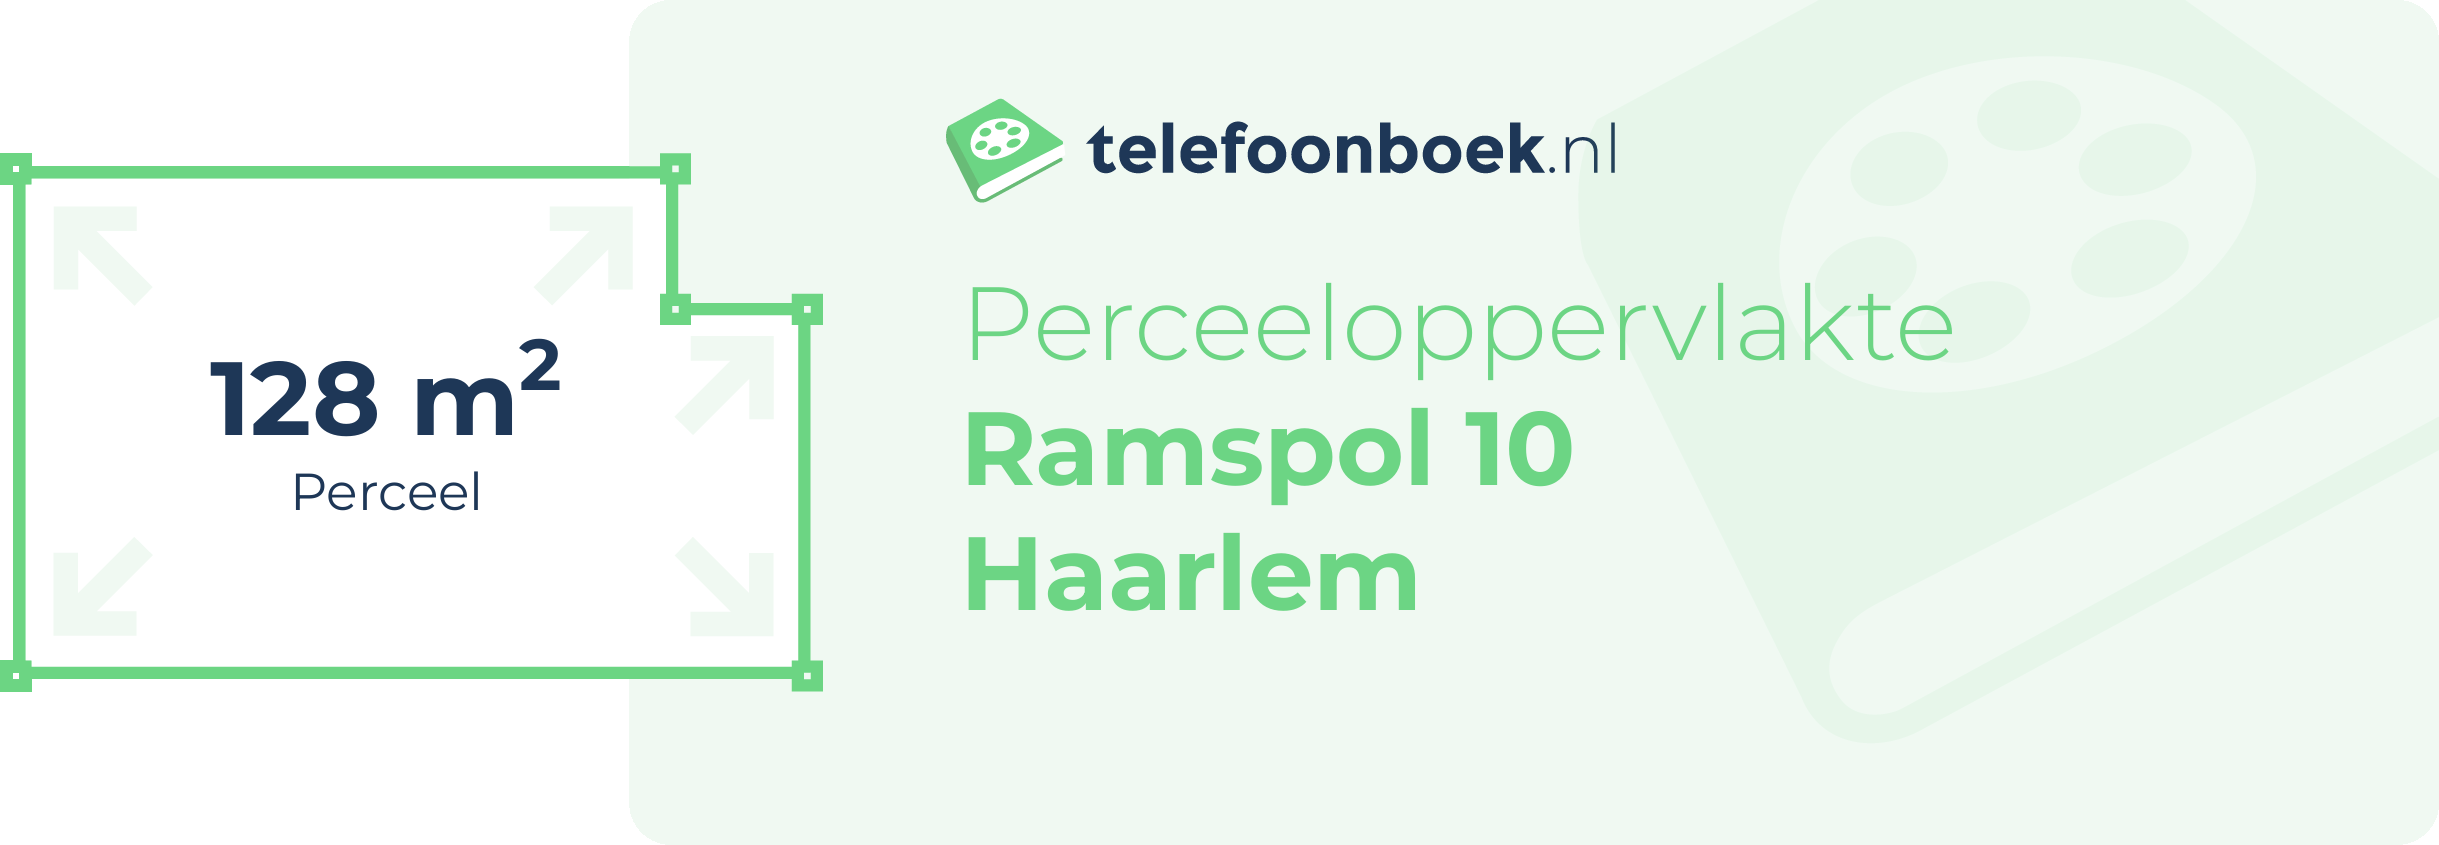 Perceeloppervlakte Ramspol 10 Haarlem